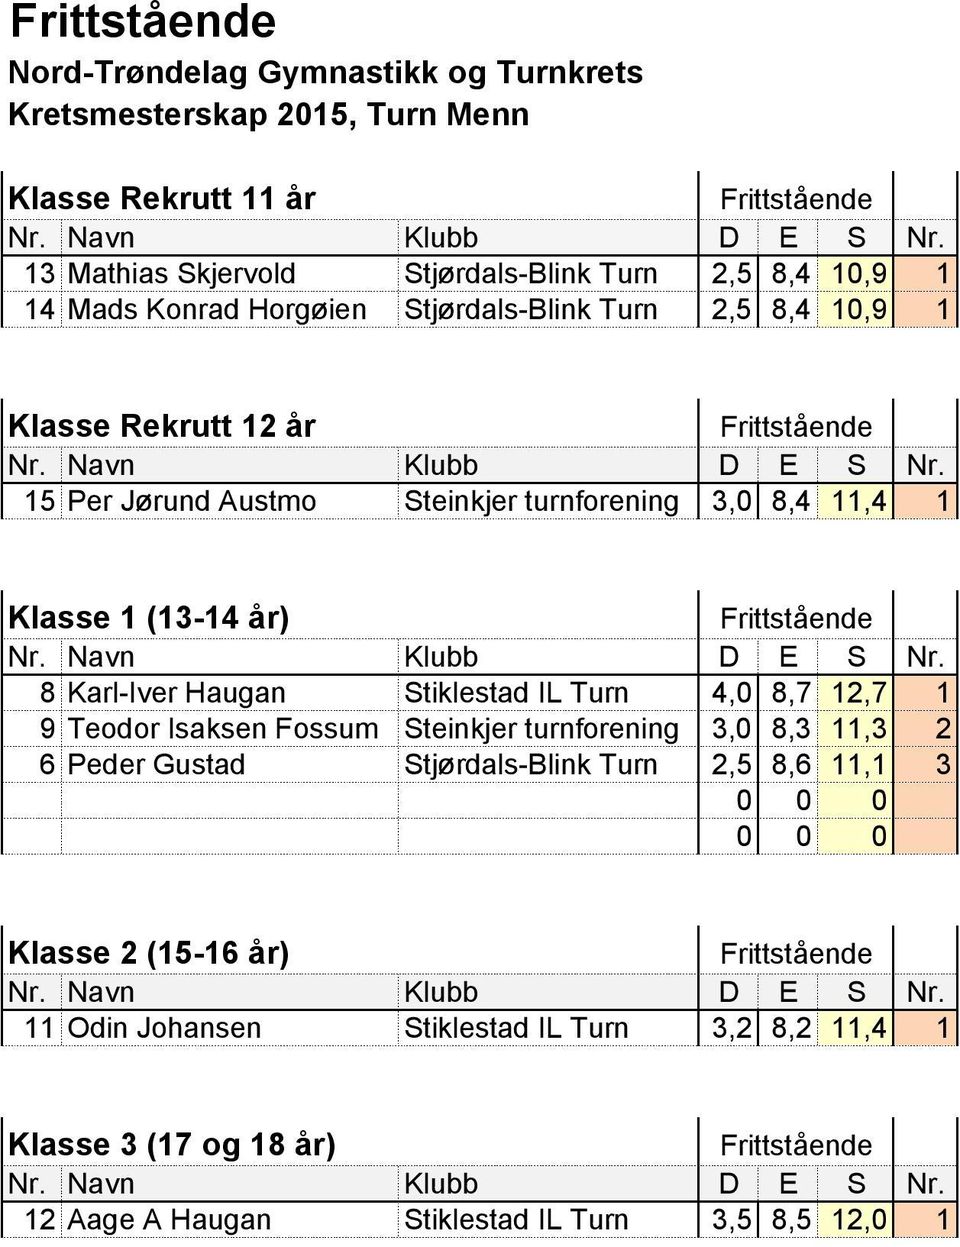 4,0 8,7 12,7 1 9 Teodor Isaksen Fossum Steinkjer turnforening 3,0 8,3 11,3 2 6 Peder Gustad Stjørdals-Blink Turn 2,5 8,6 11,1 3 0 0 0 0 0 0